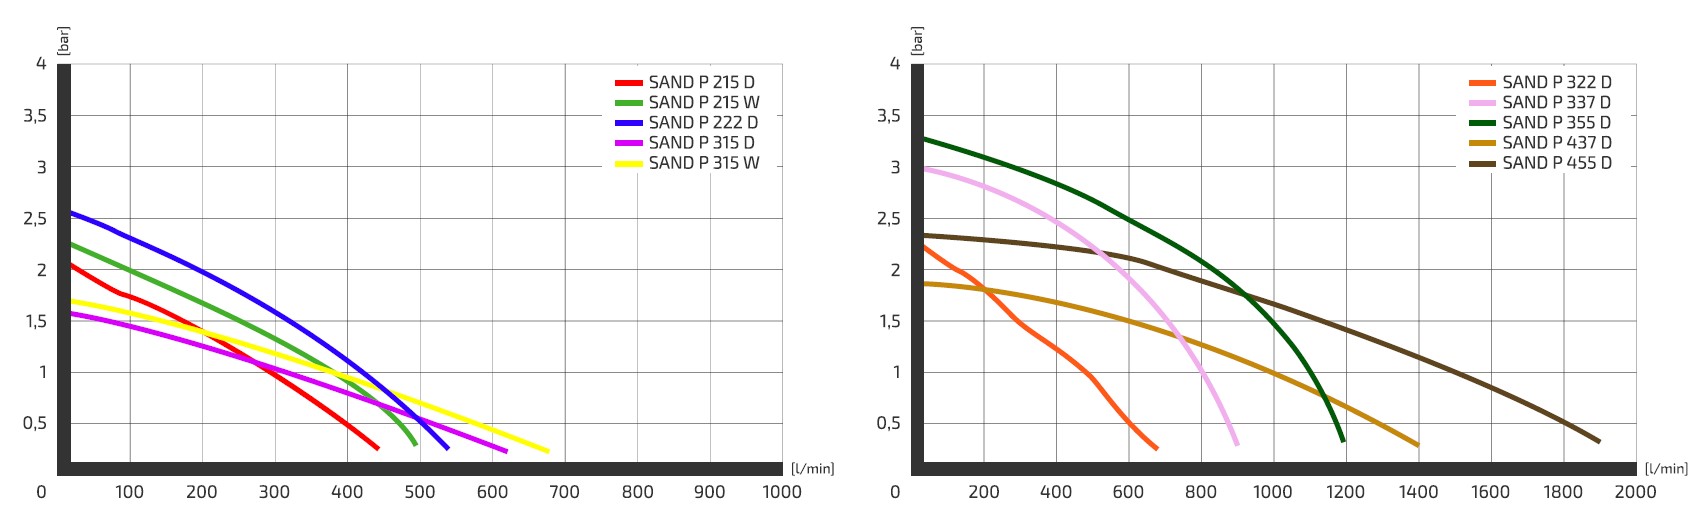 SAND SPT P 215 D Schmutzwasserpumpe, 400V, 450 l/min - Zuwa 1680020